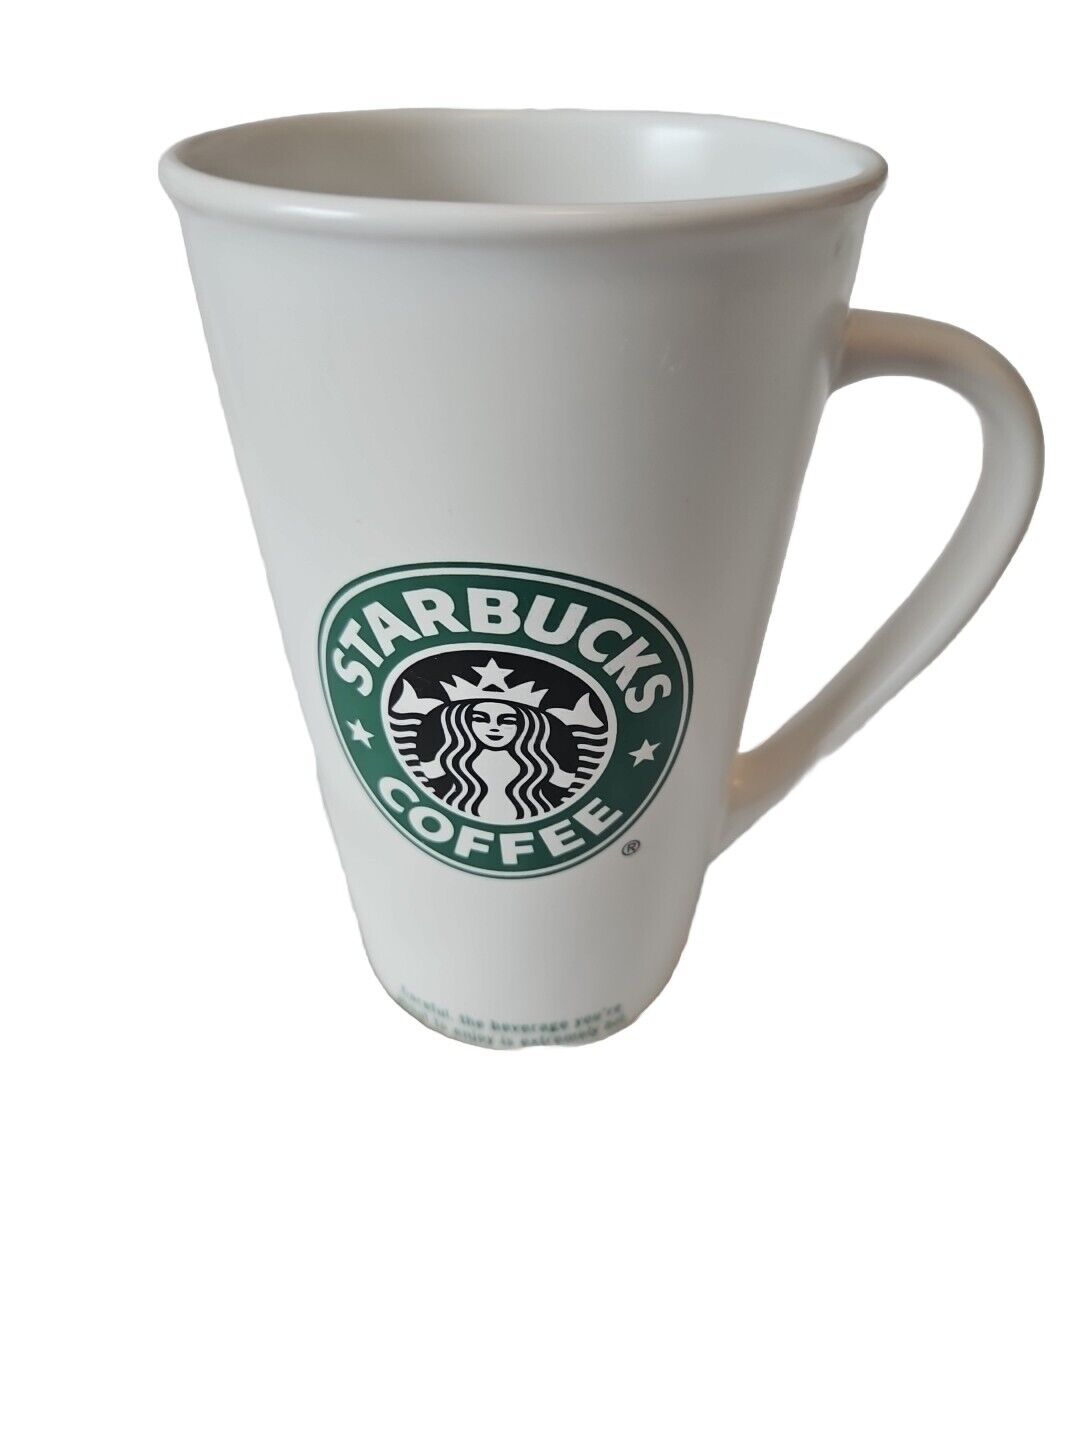 Cool 2005 Starbucks Coffee Mug Ceramic Collectible Excellent Condition 16oz